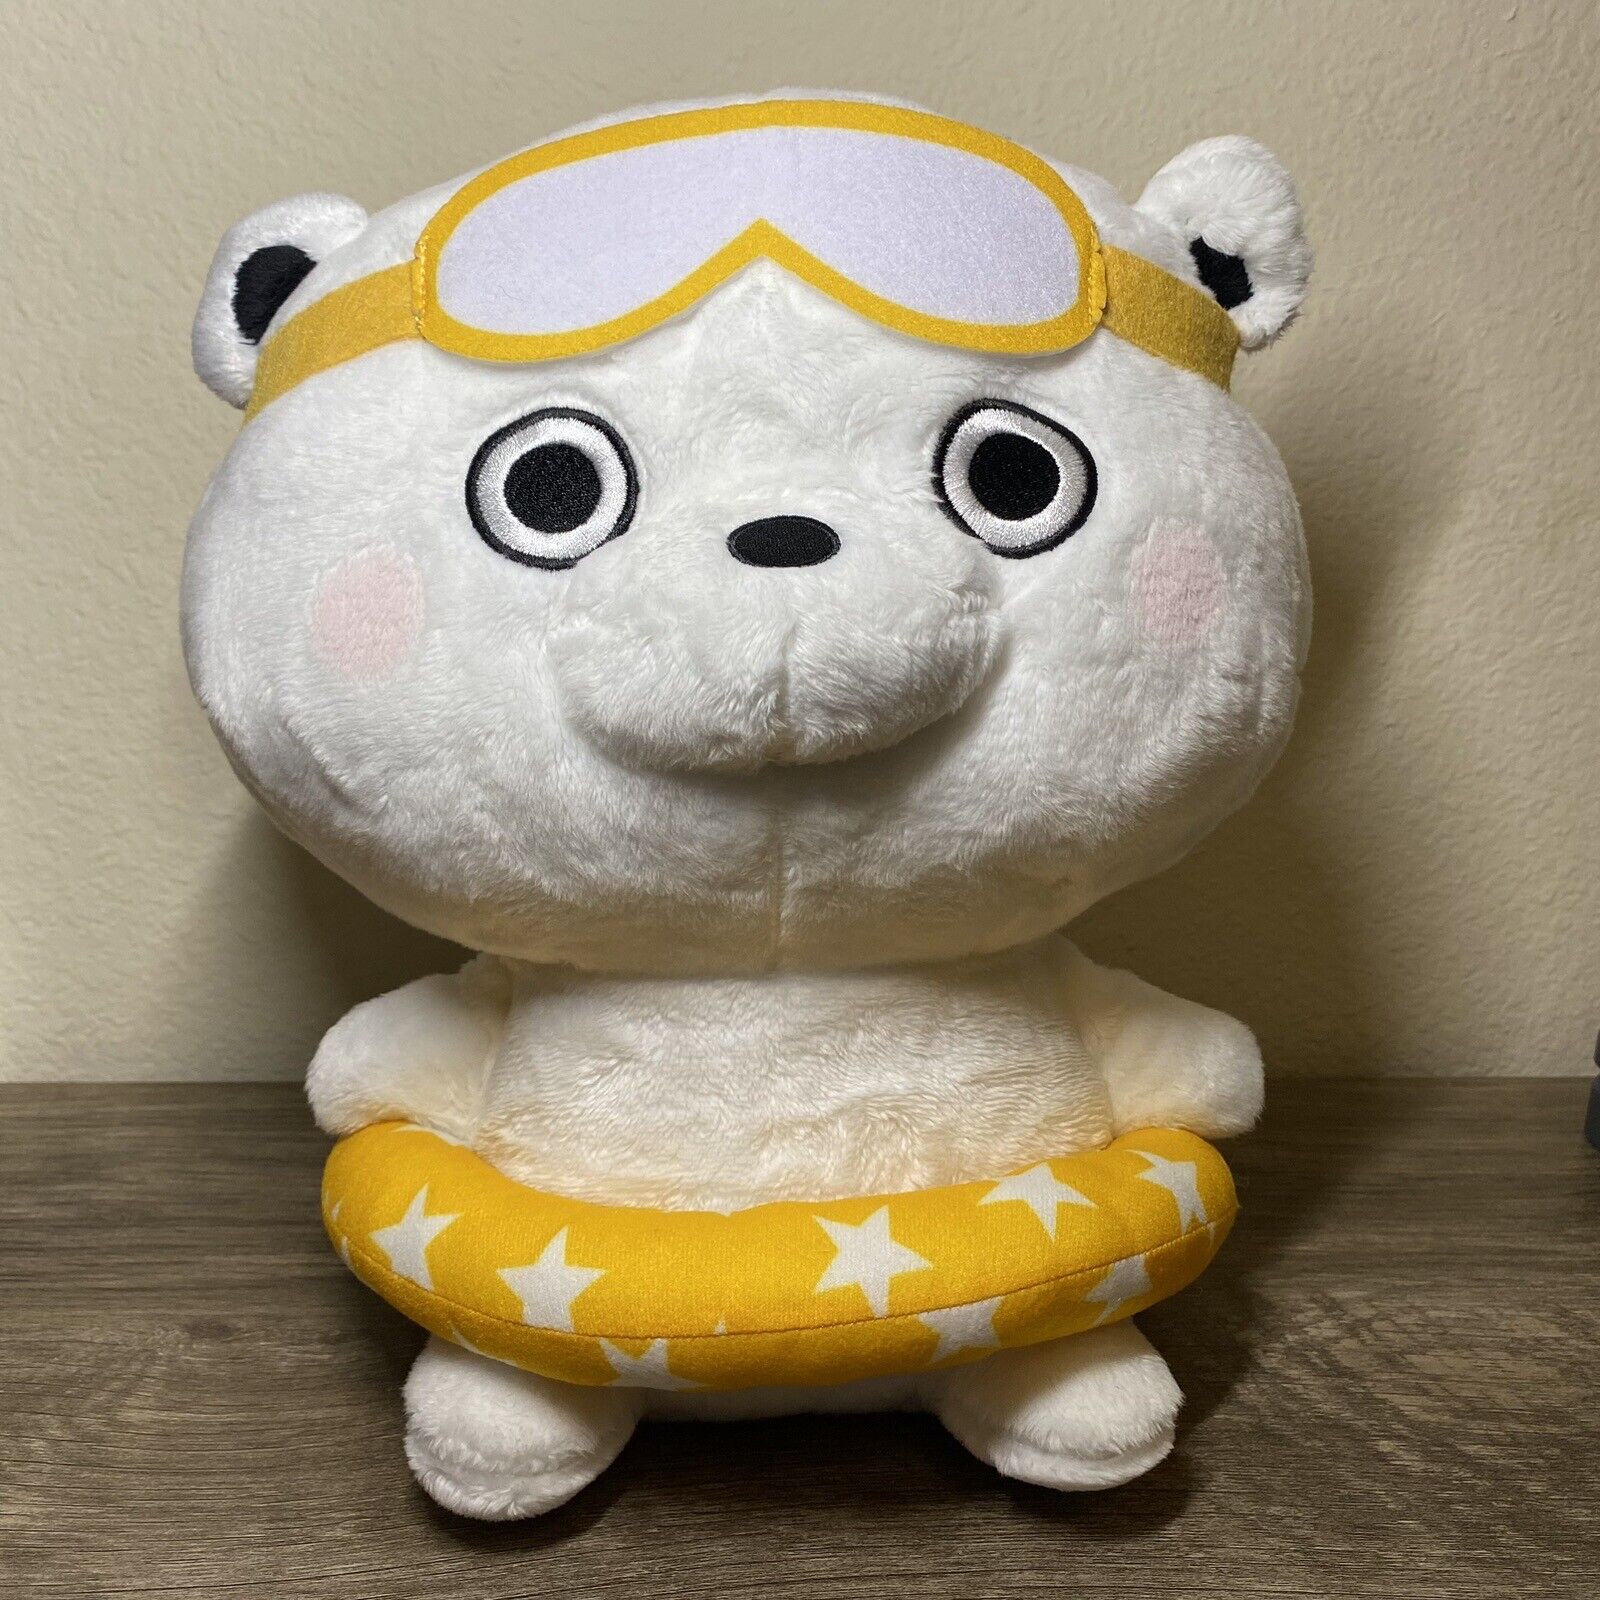 Furyu Yosistamp 13” Plush Bear From Japan Yoshistamp Swimmer NWT Swimming Tube